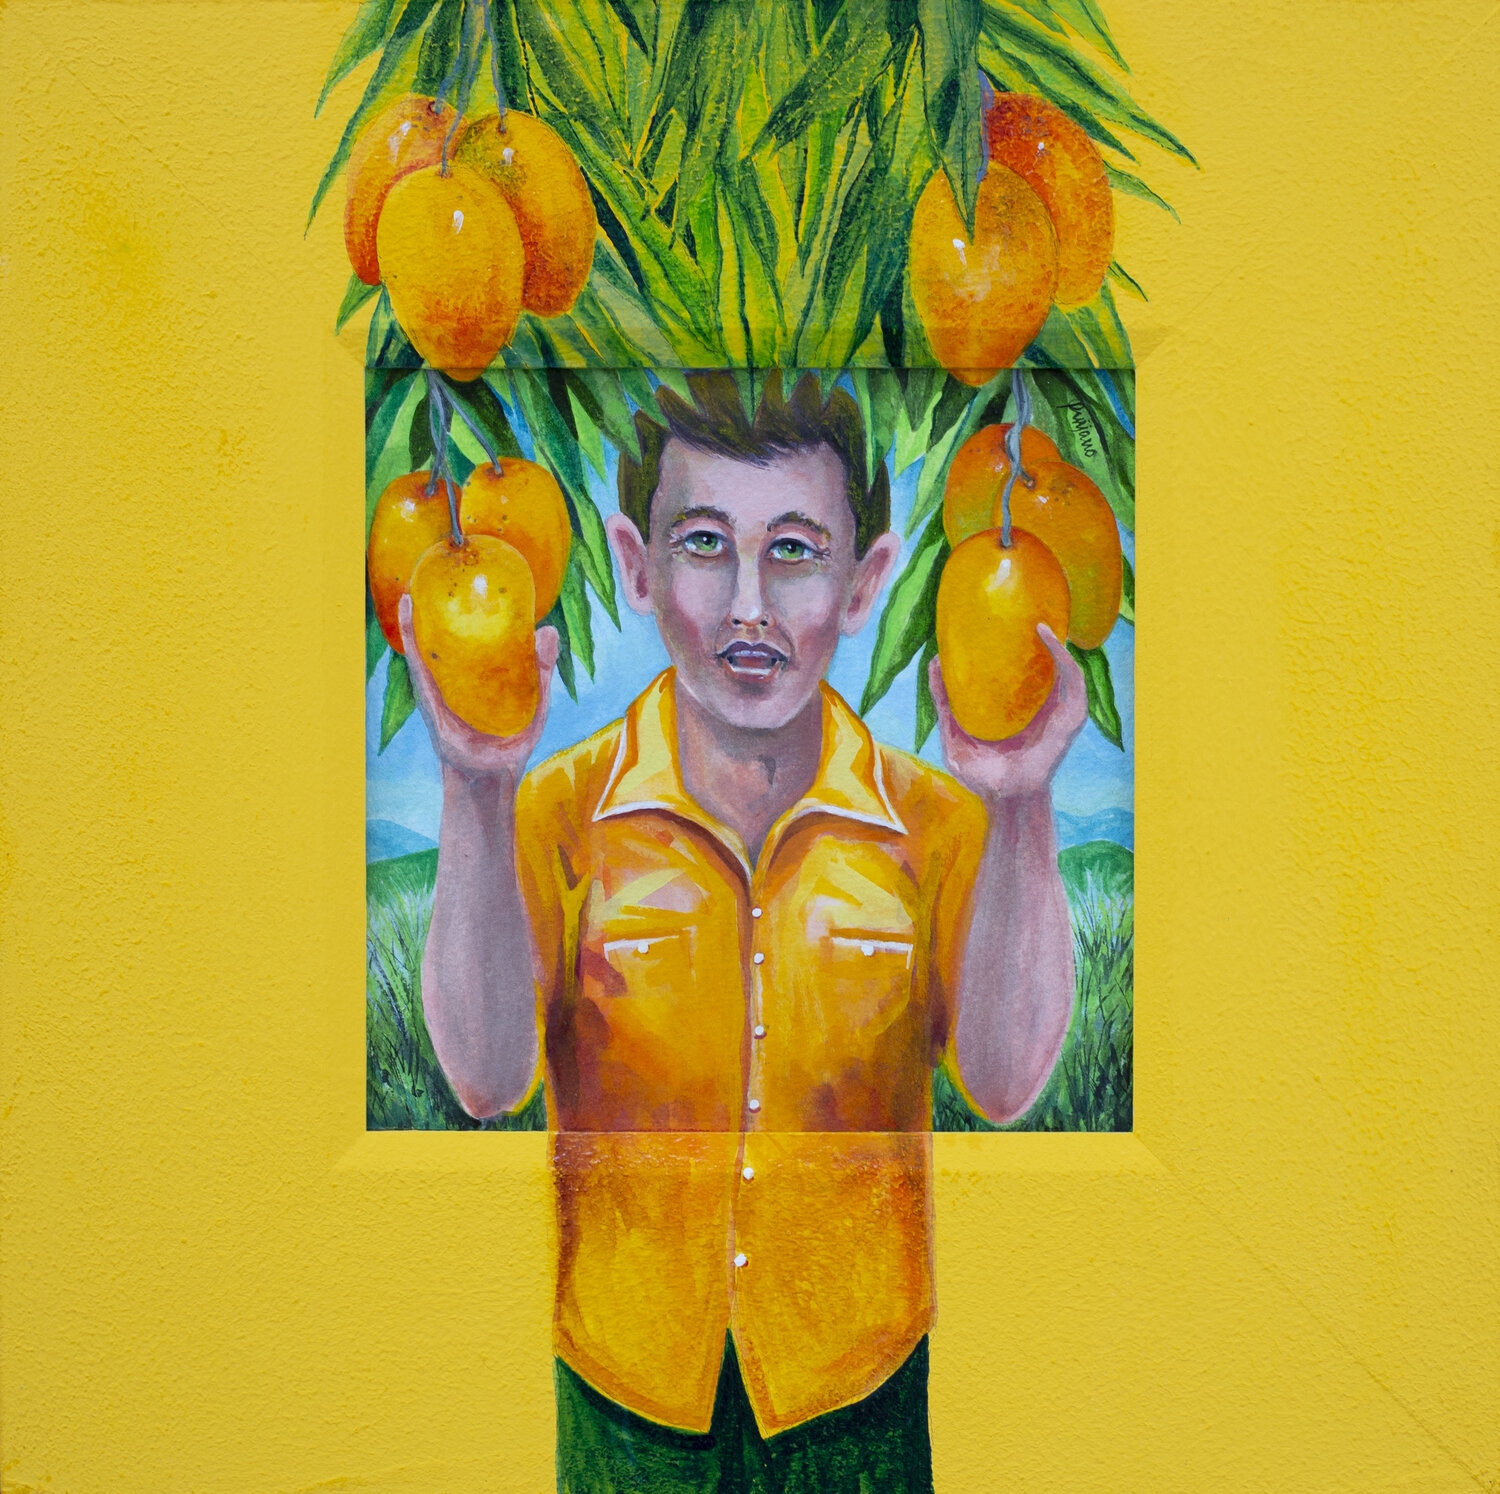 Nick Quijano, Mangocero (Mango man), 2020